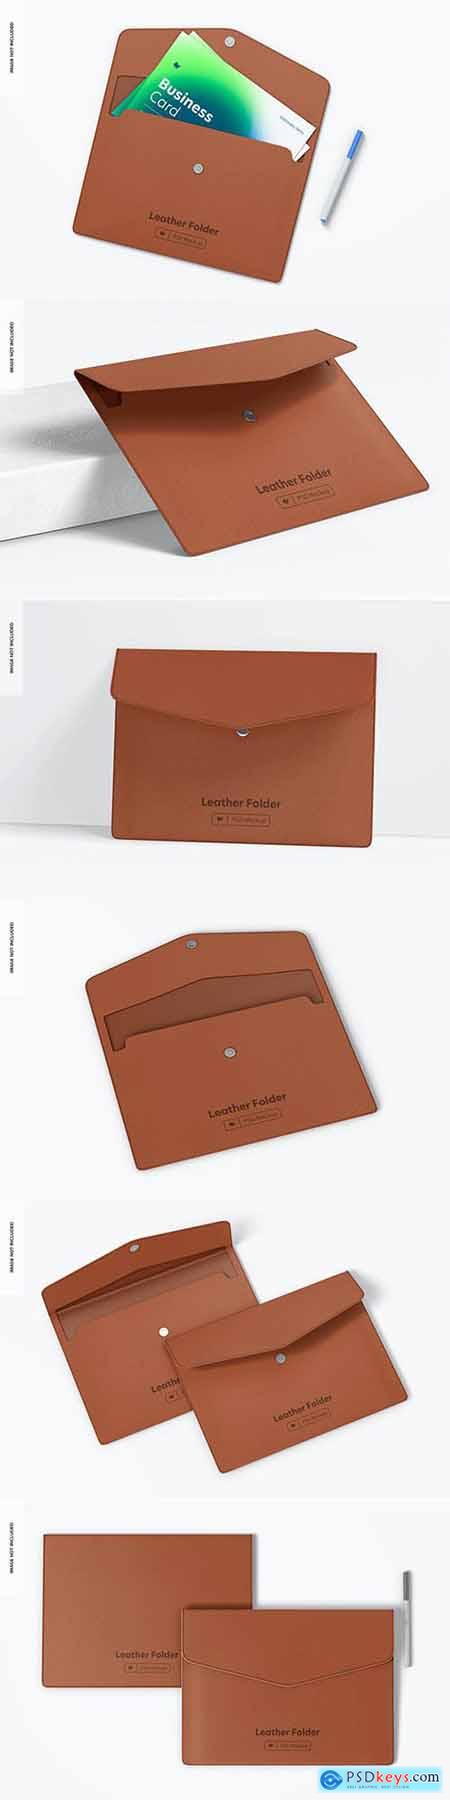 Leather folders mockup